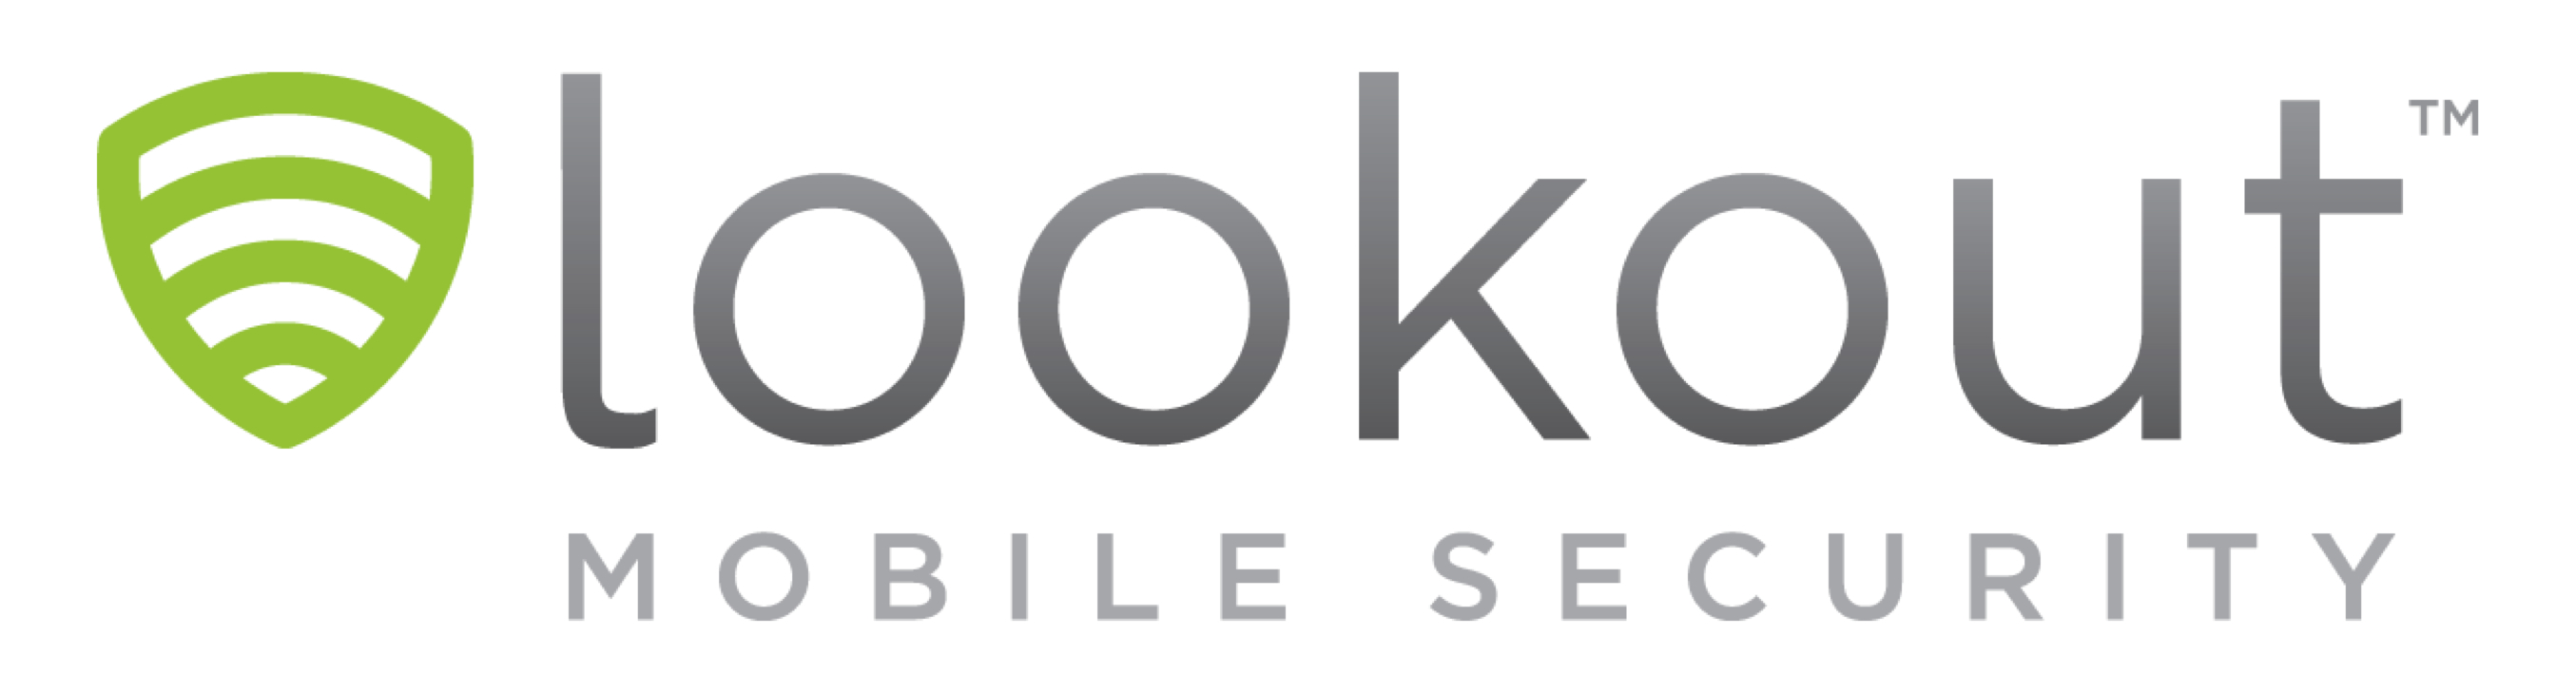 Lookout Logo White